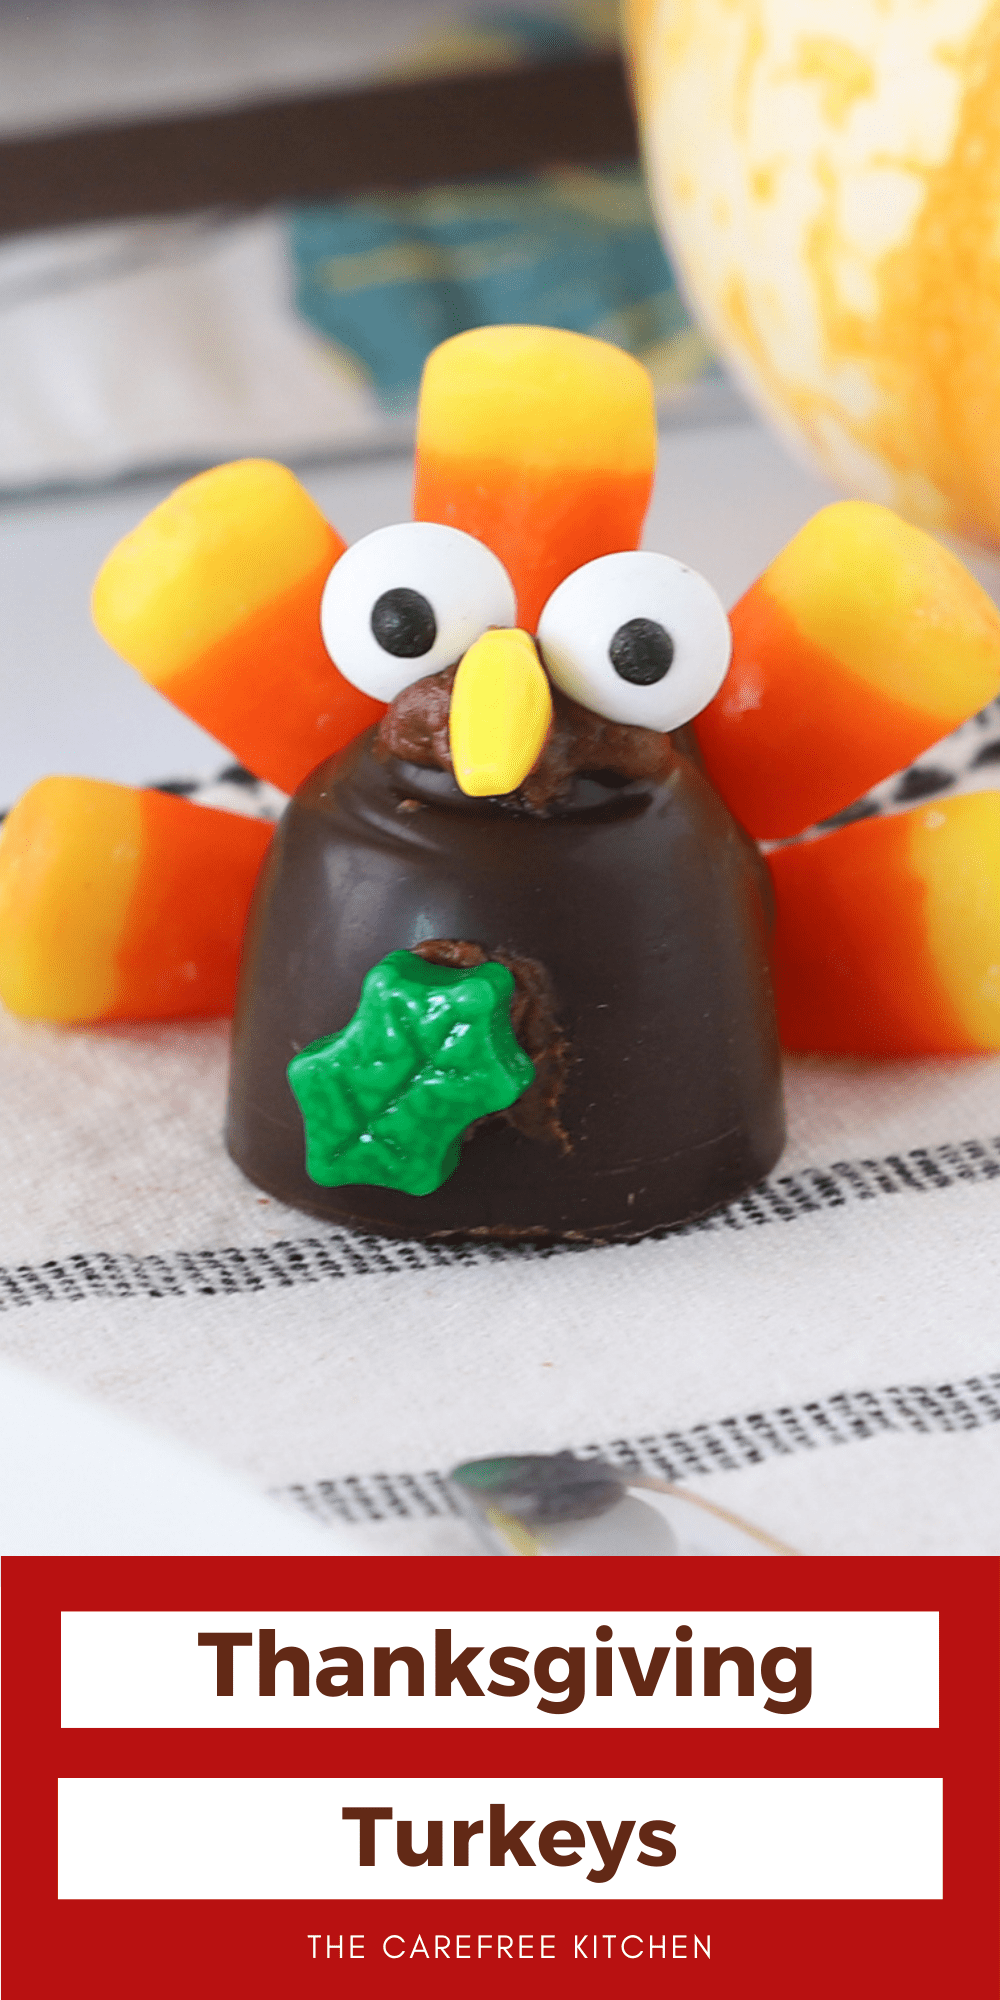 Thanksgiving Chocolate Turkeys - The Carefree Kitchen